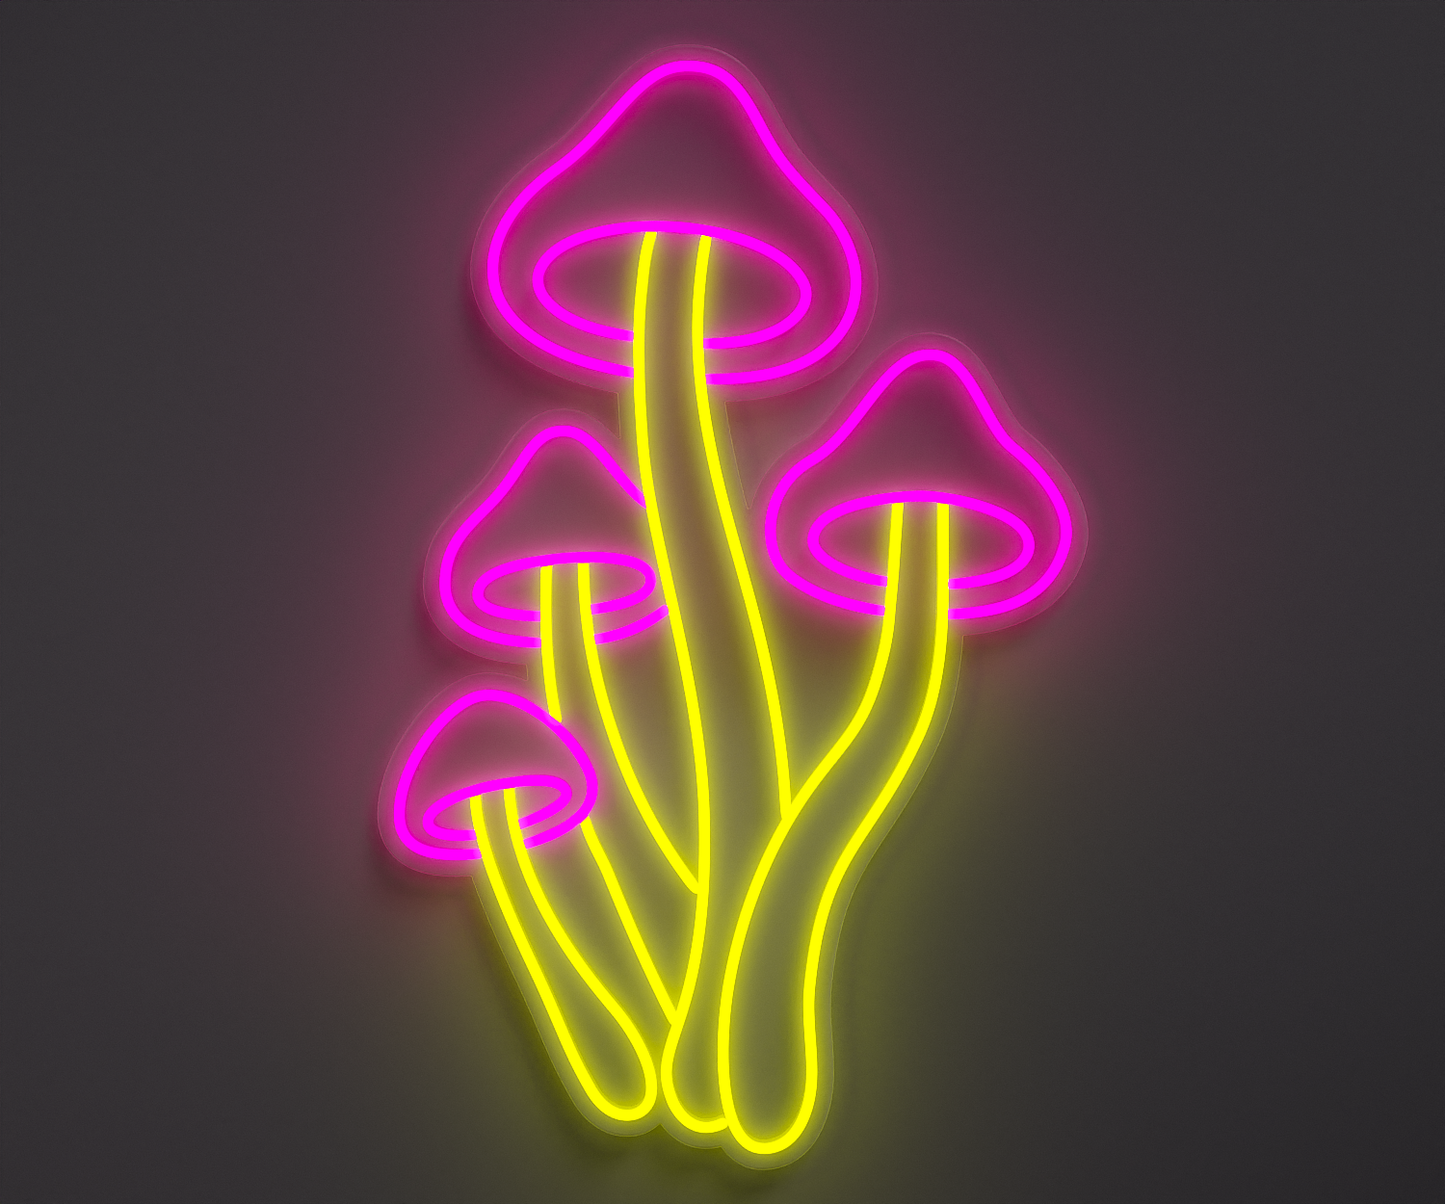 pink and bright yellow magic mushroom neon sign